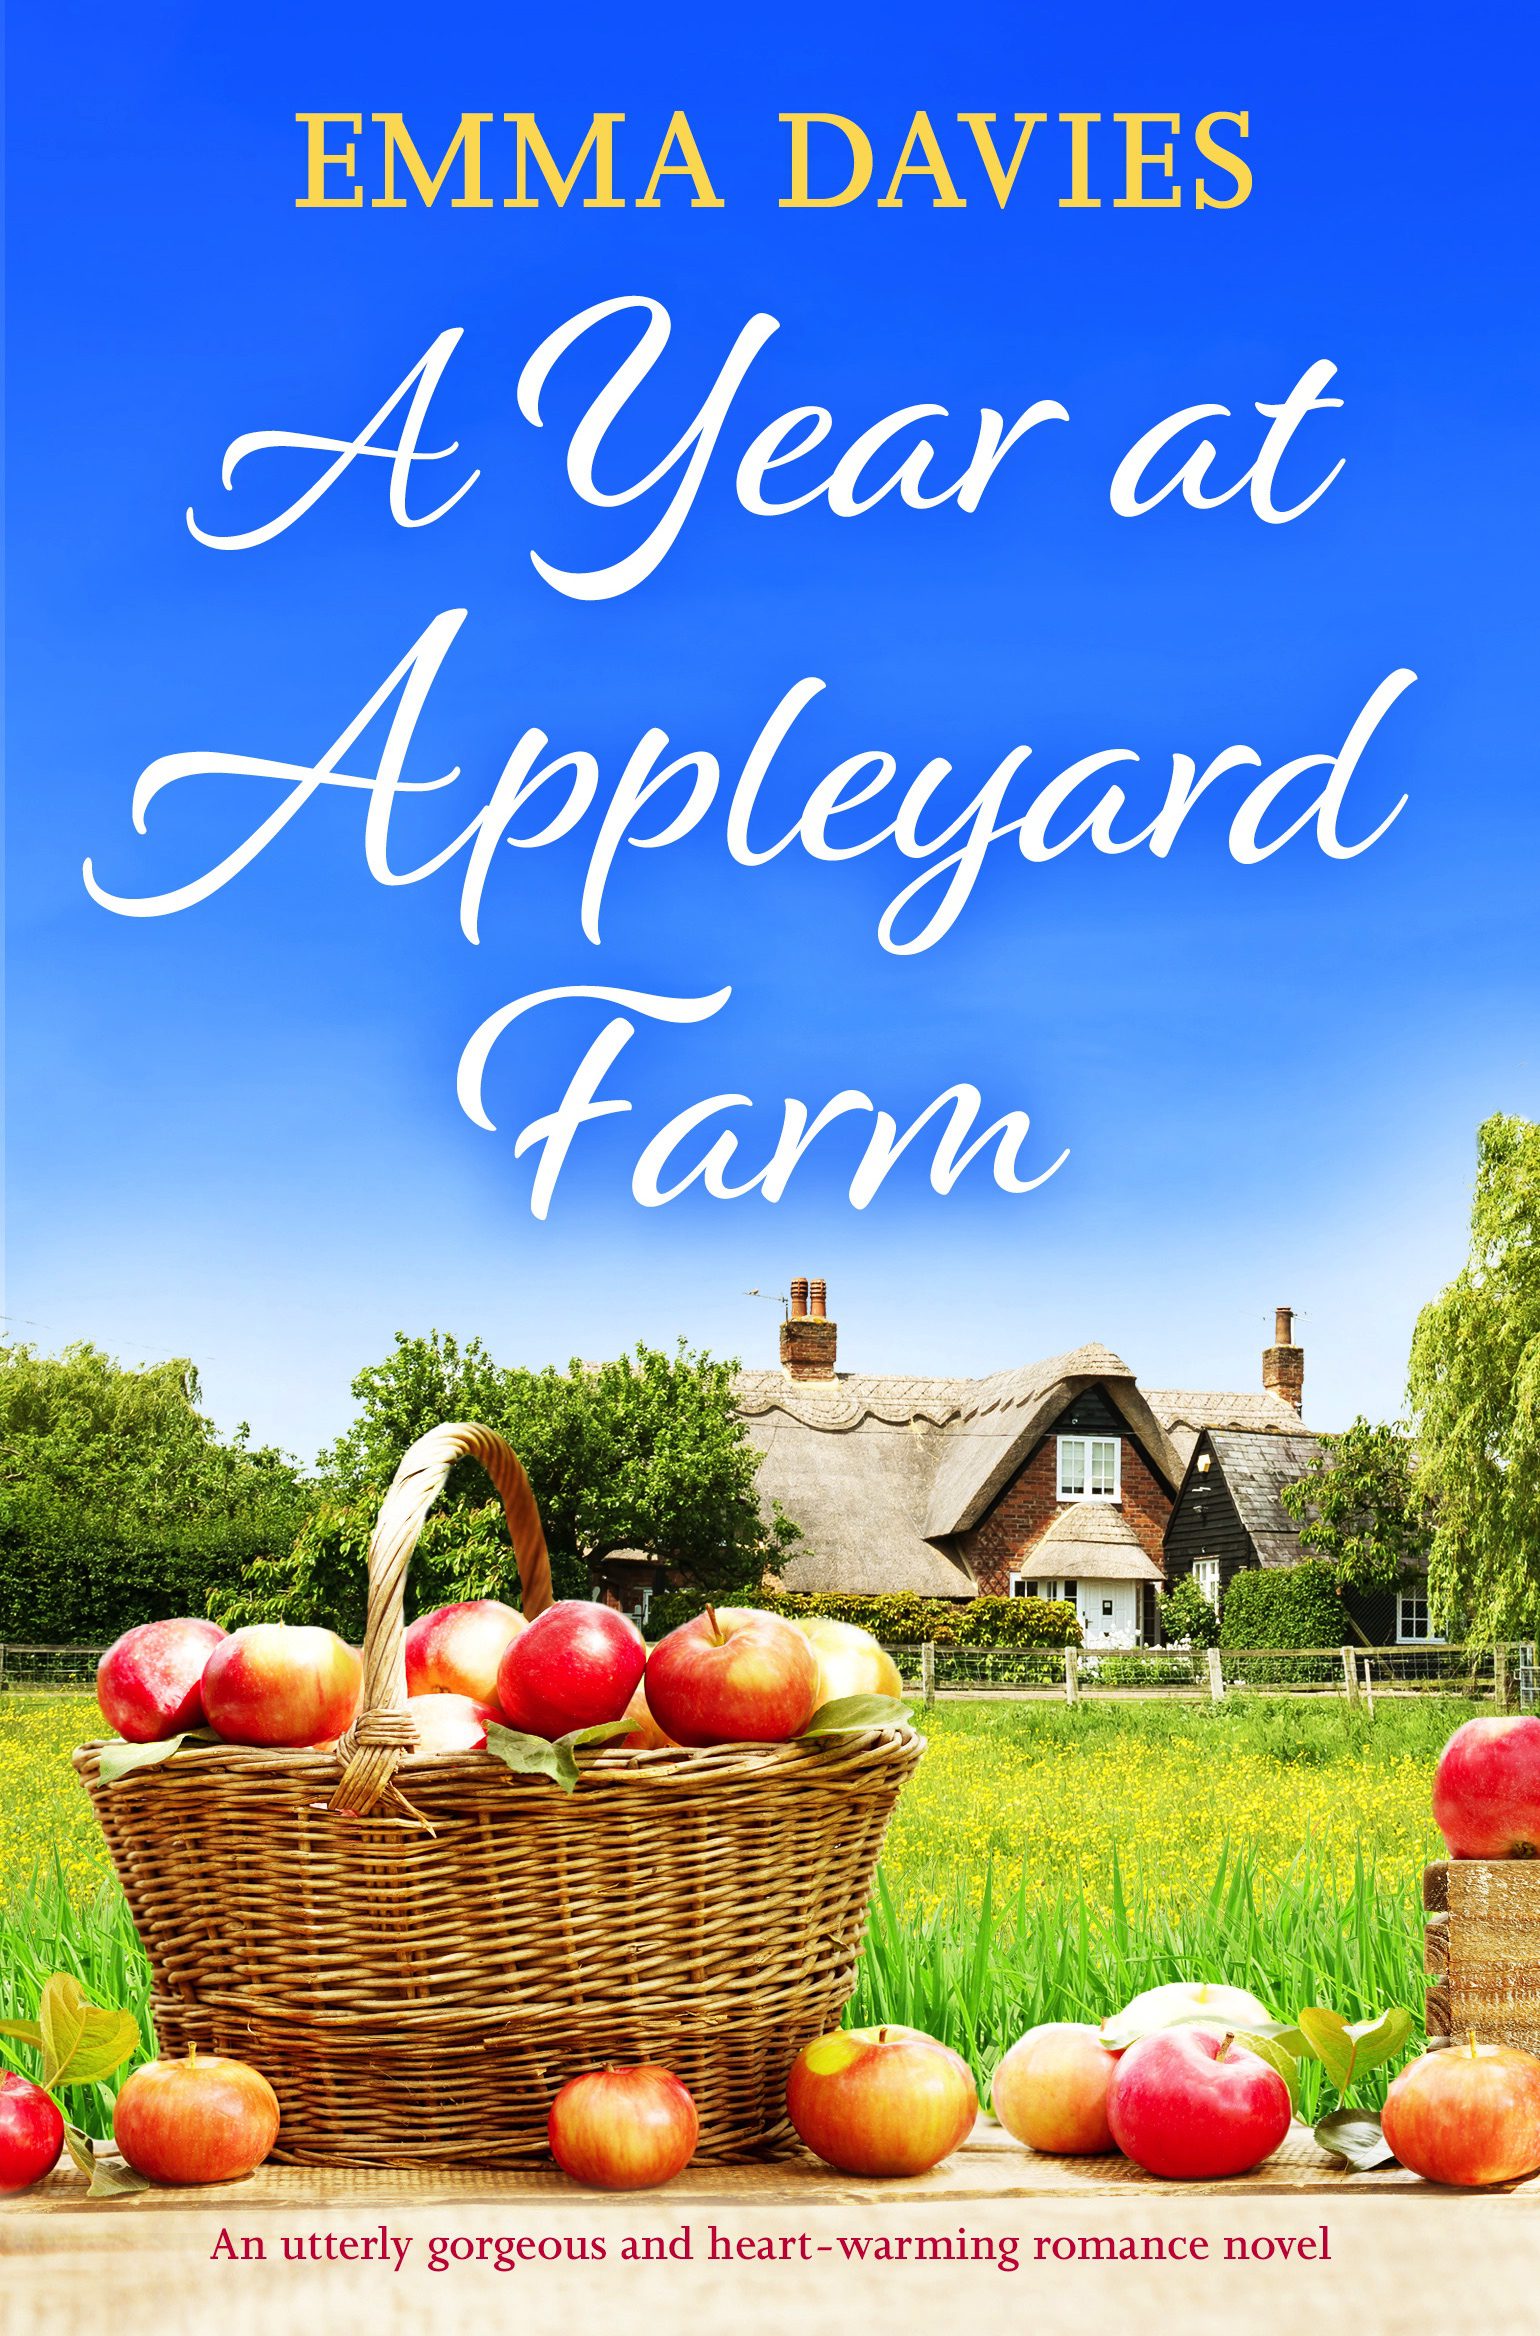 A Year at Appleyard Farm book cover